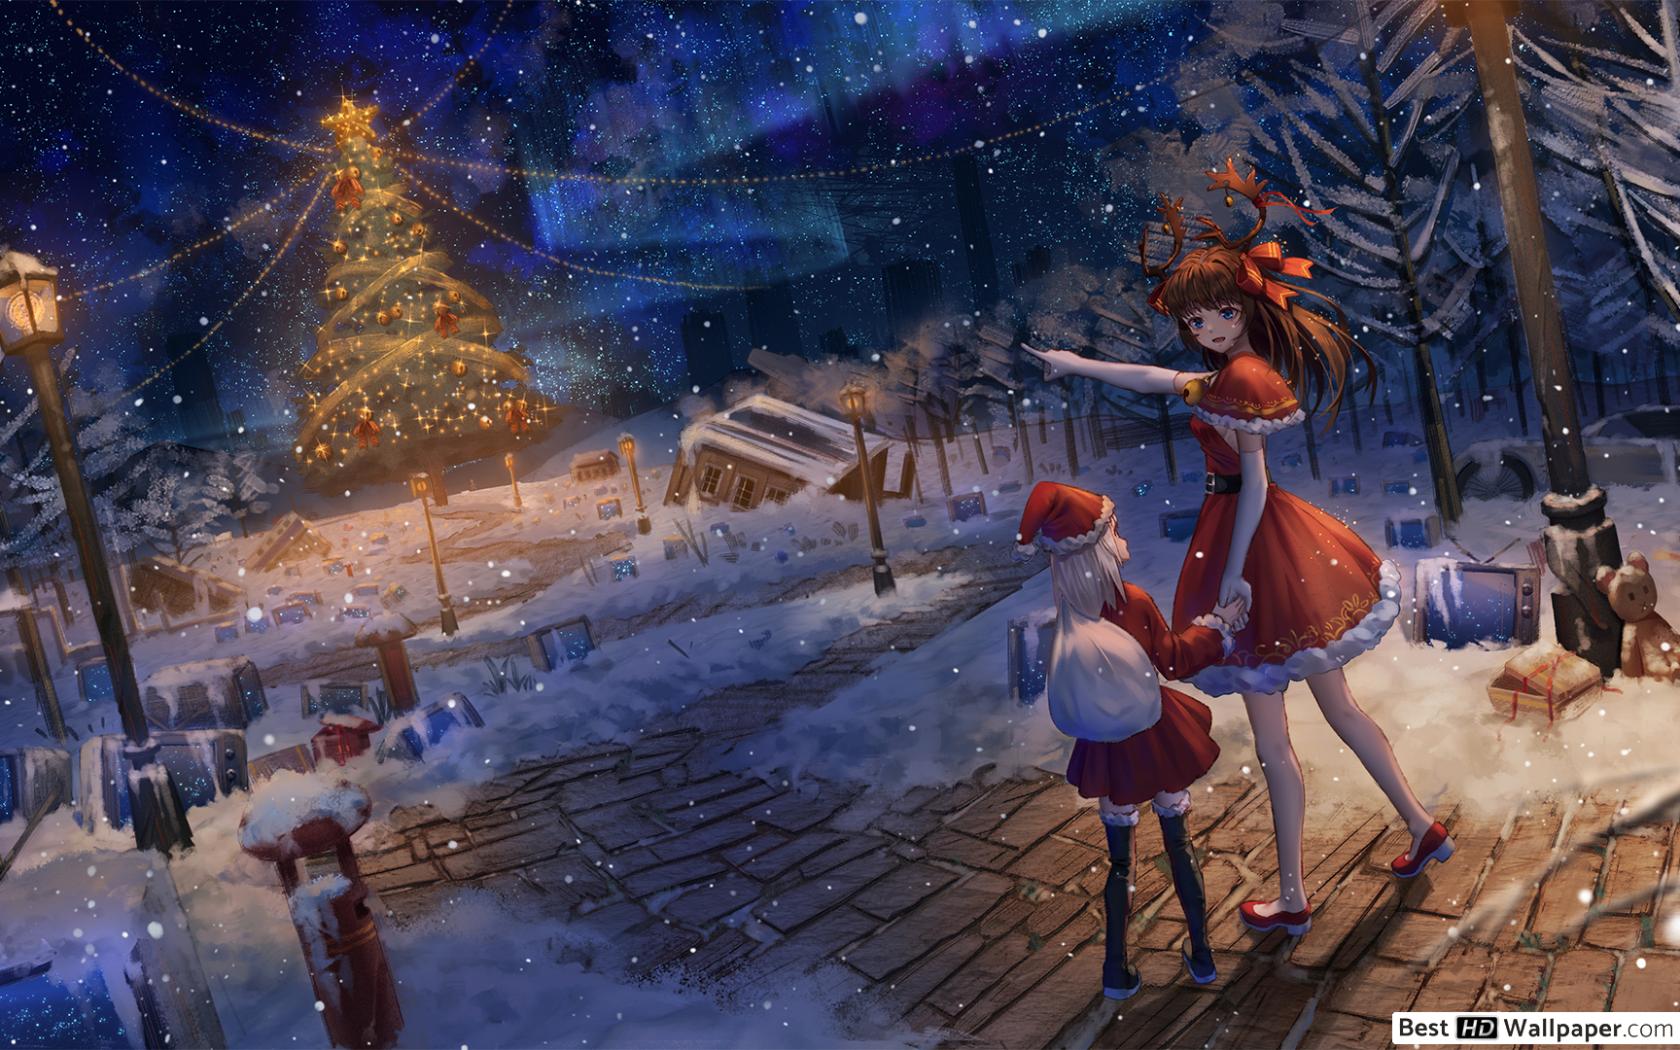 Anime Wallpapers Christmas Scenery